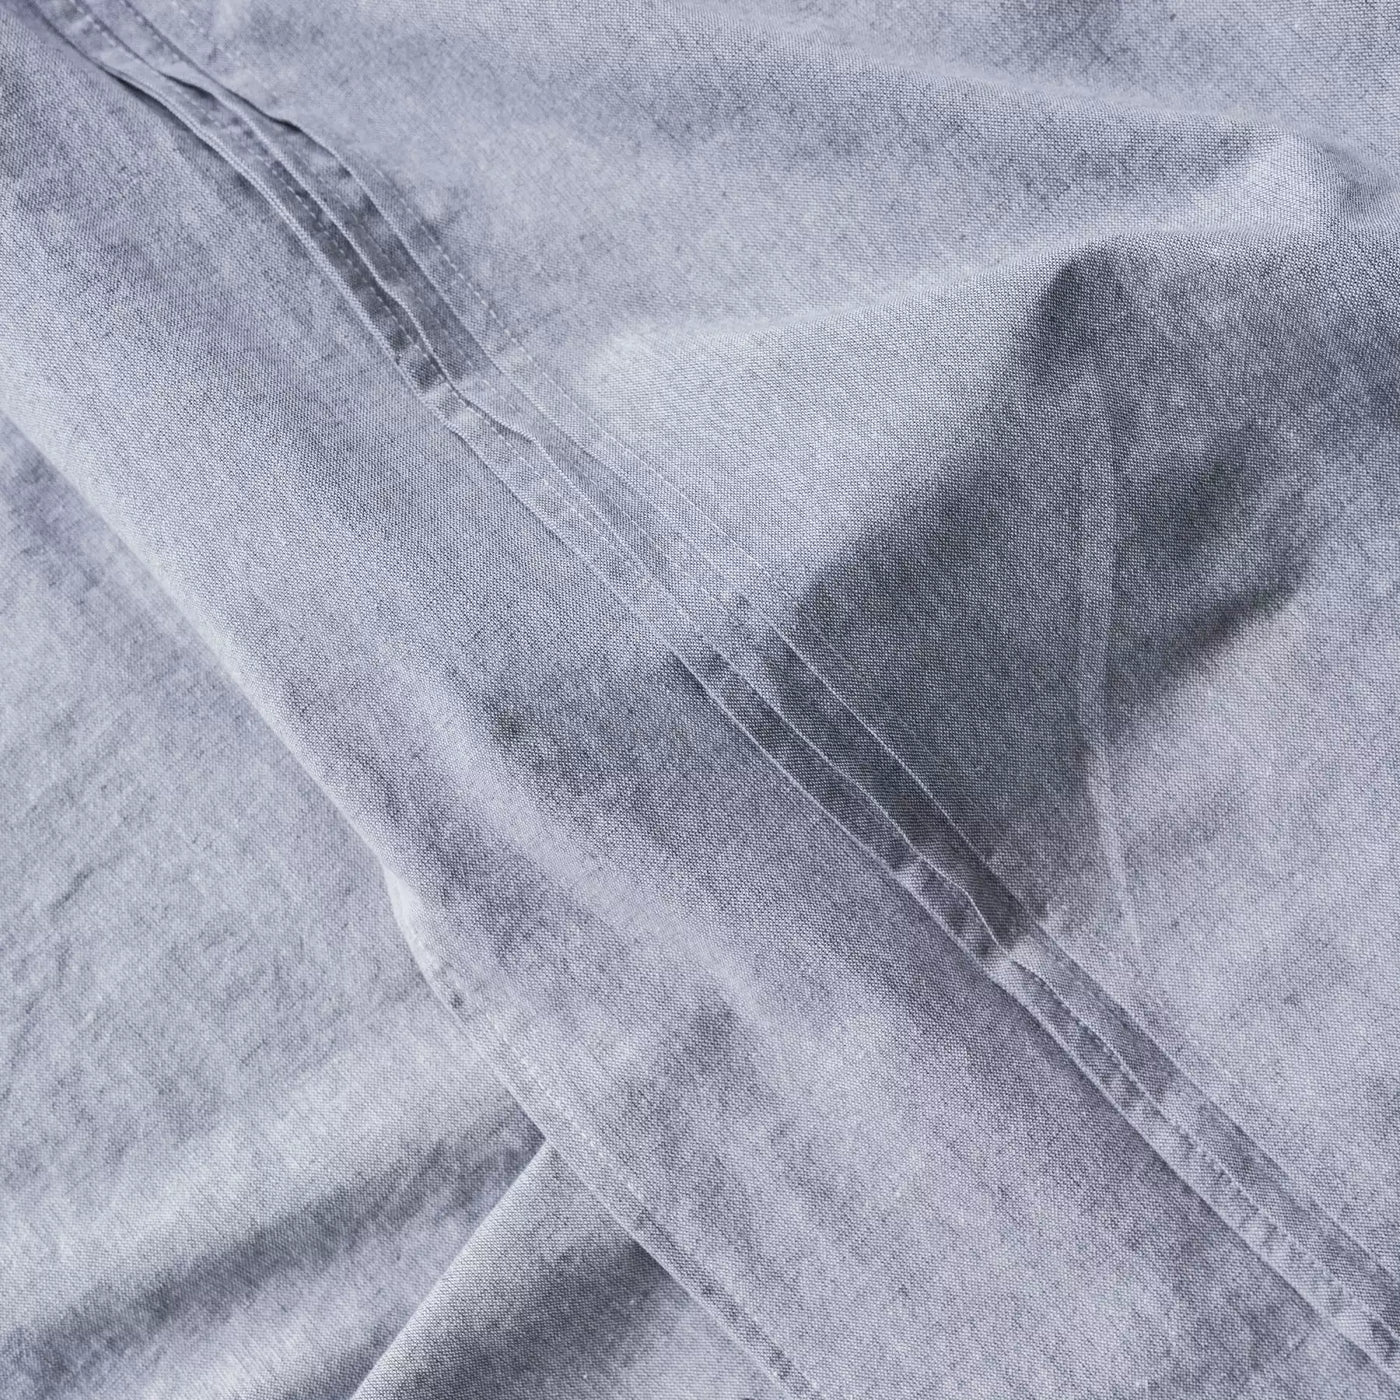 Linen & Cotton bedding set with Duvet cover 135x200 in Graphite Melange